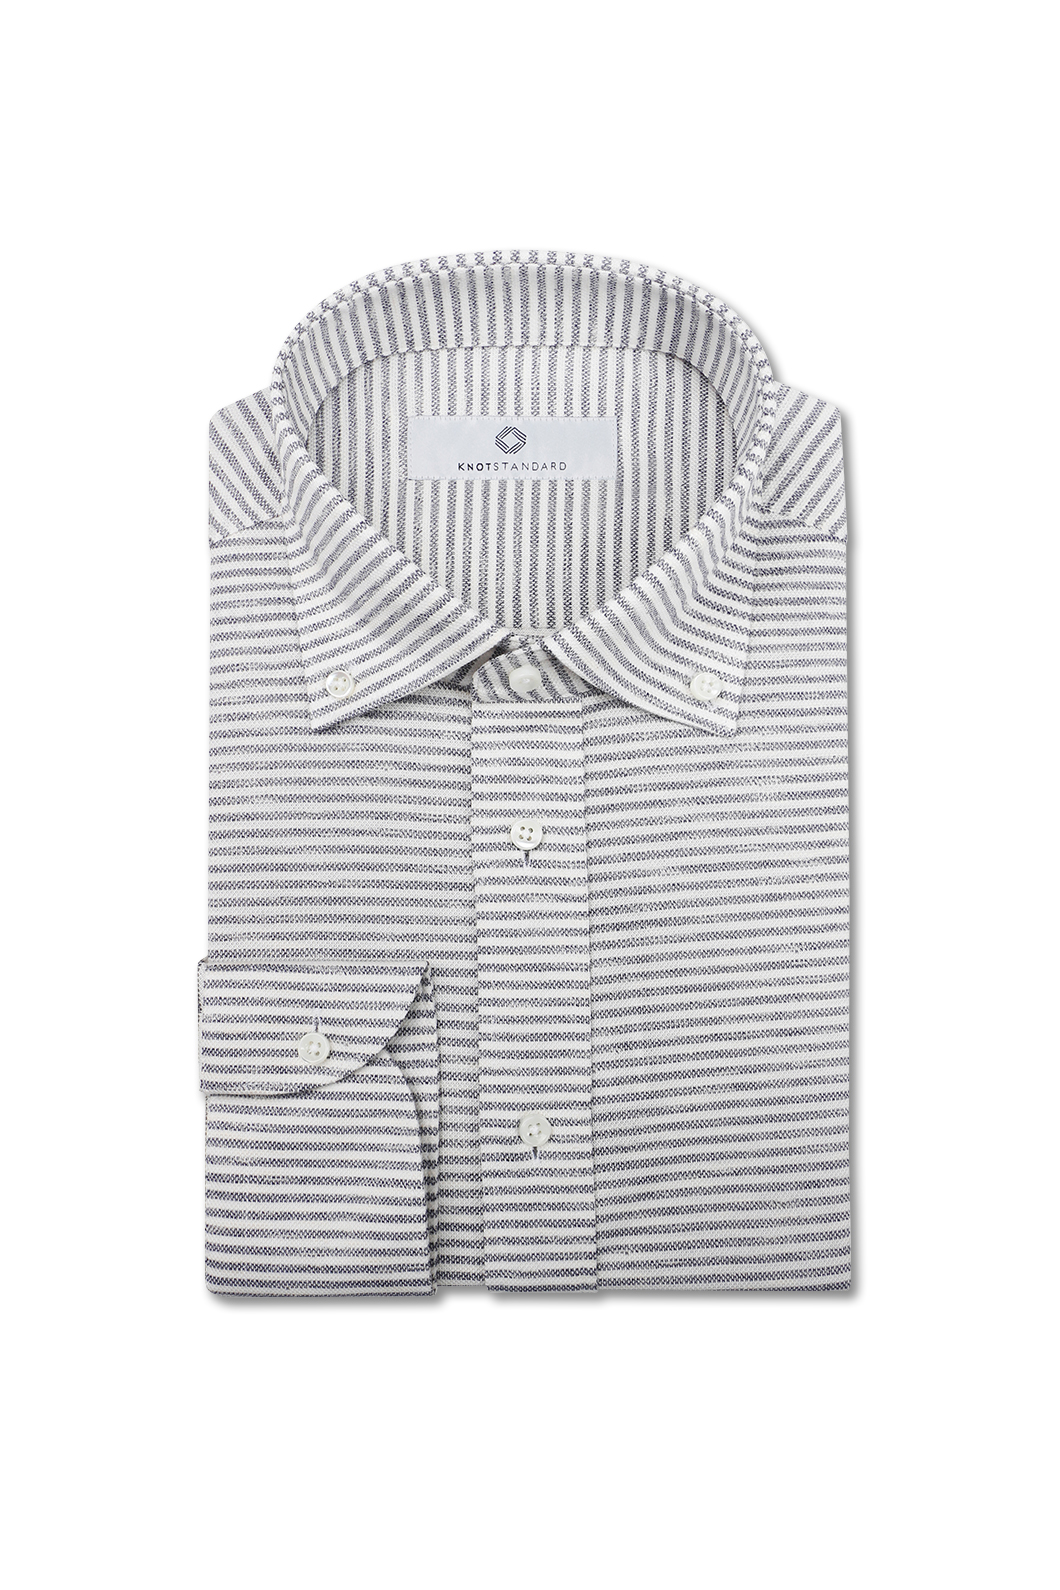 Custom Made Shirts for Men | Knot Standard